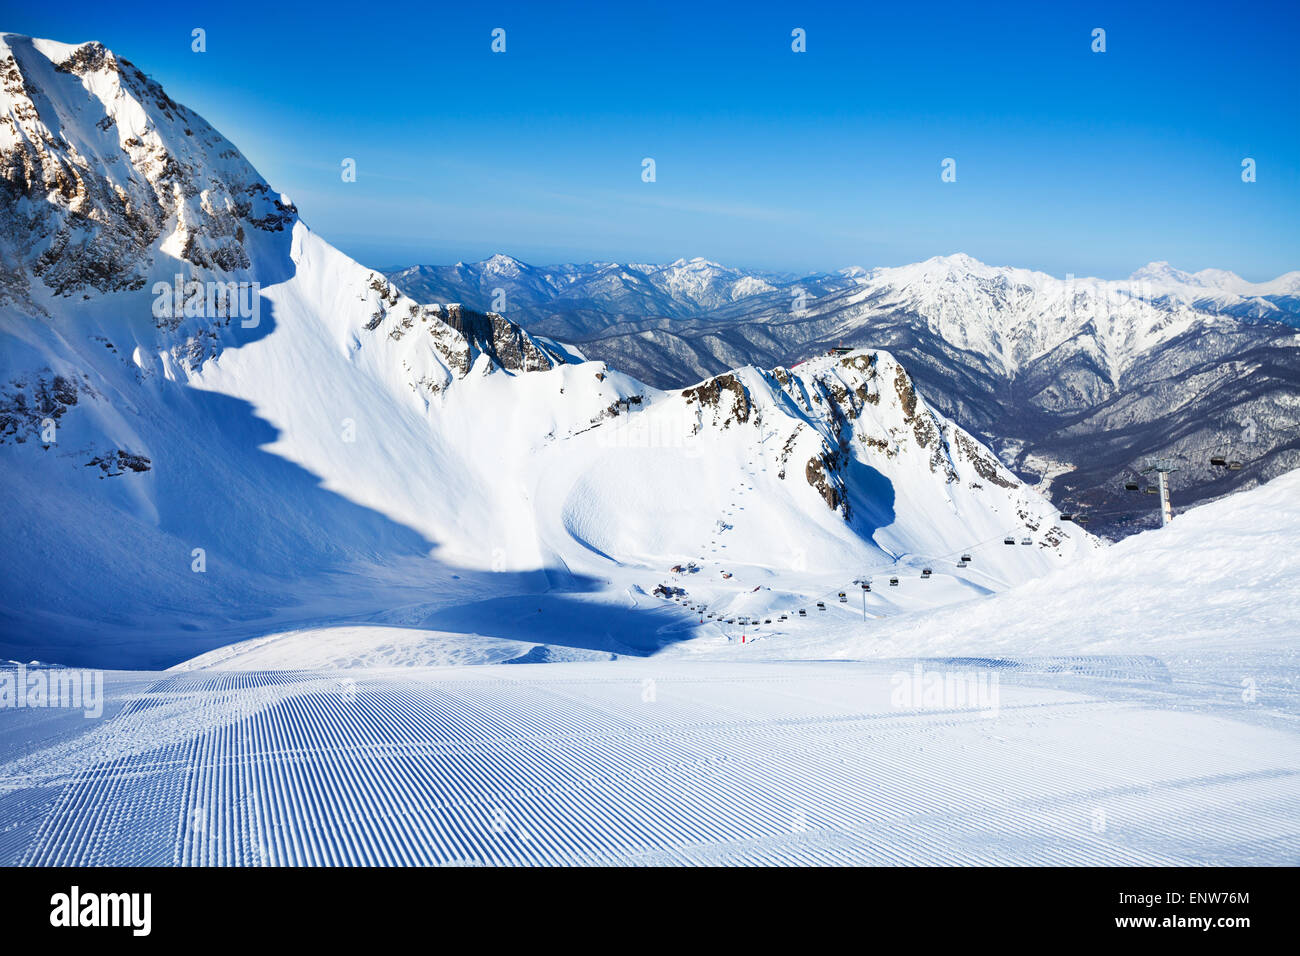 Ski-track with Caucasus mountains on background Stock Photo